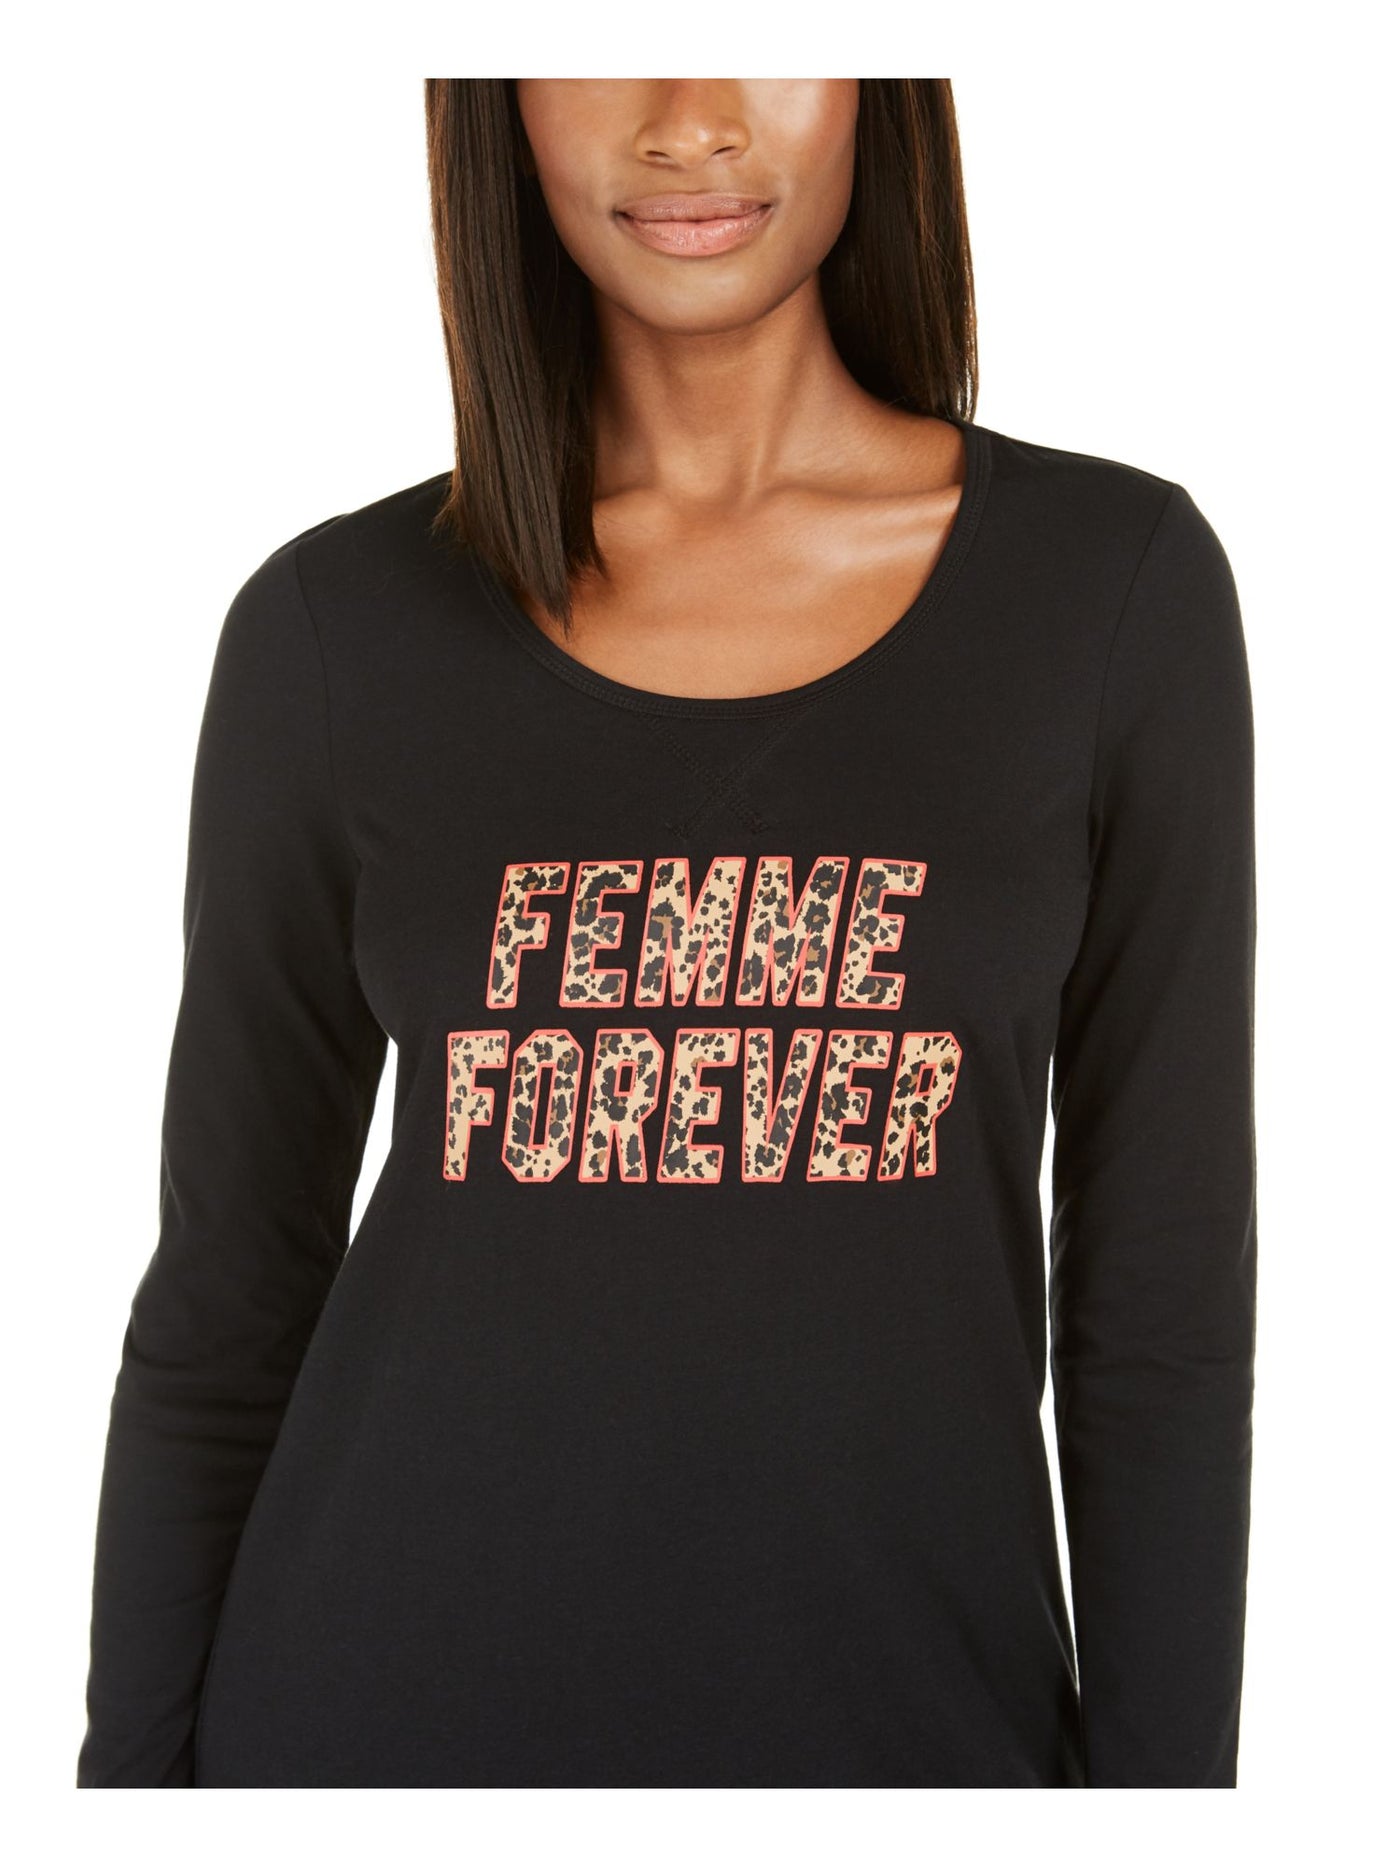 JENNI Intimates Black Femme Forever Print Sleepwear Nightgown Size: XXL